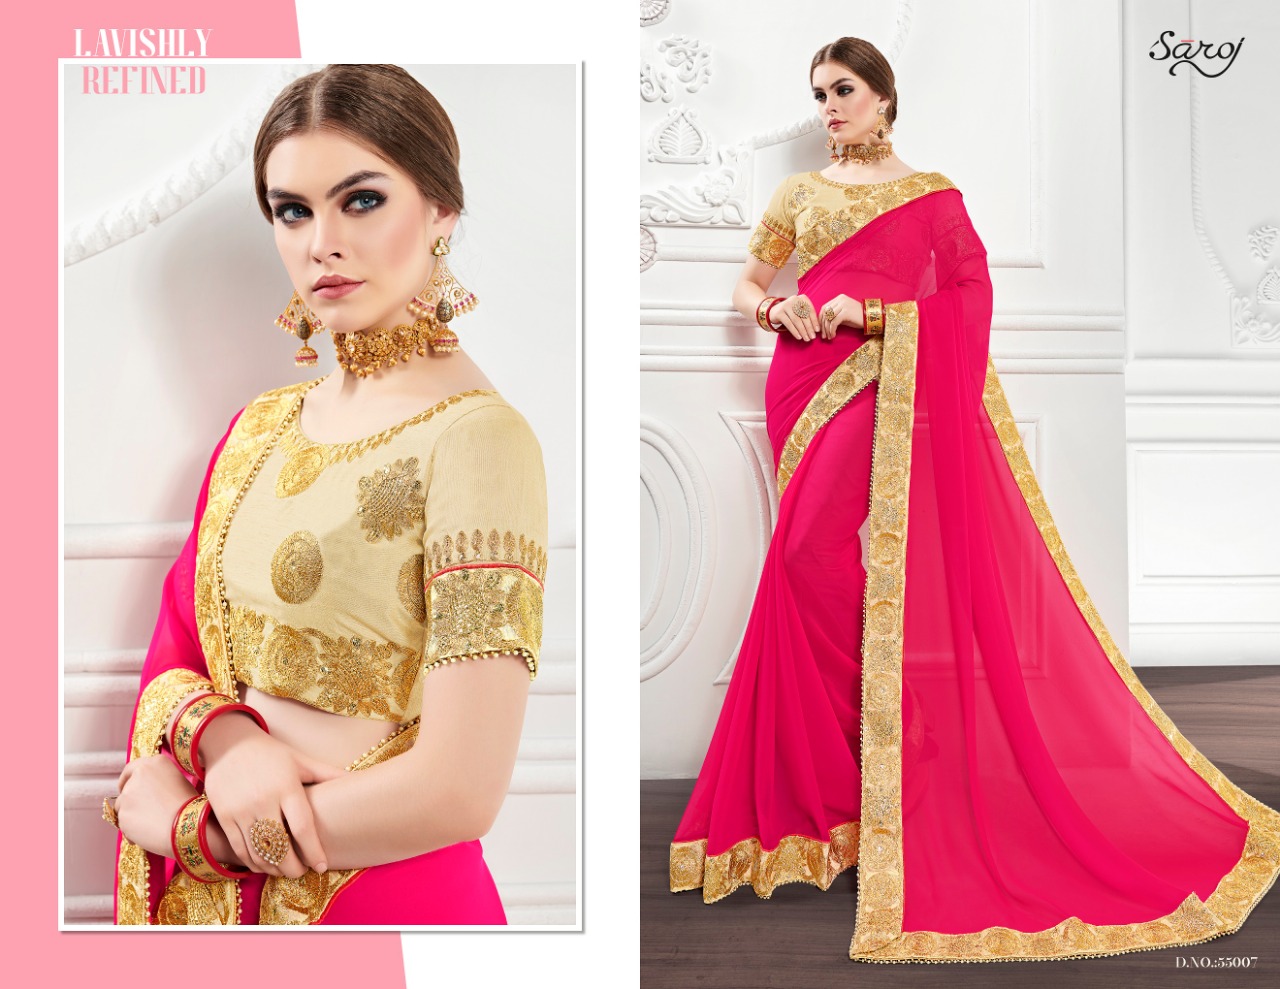 Saroj Saree Indian Fashion 55007